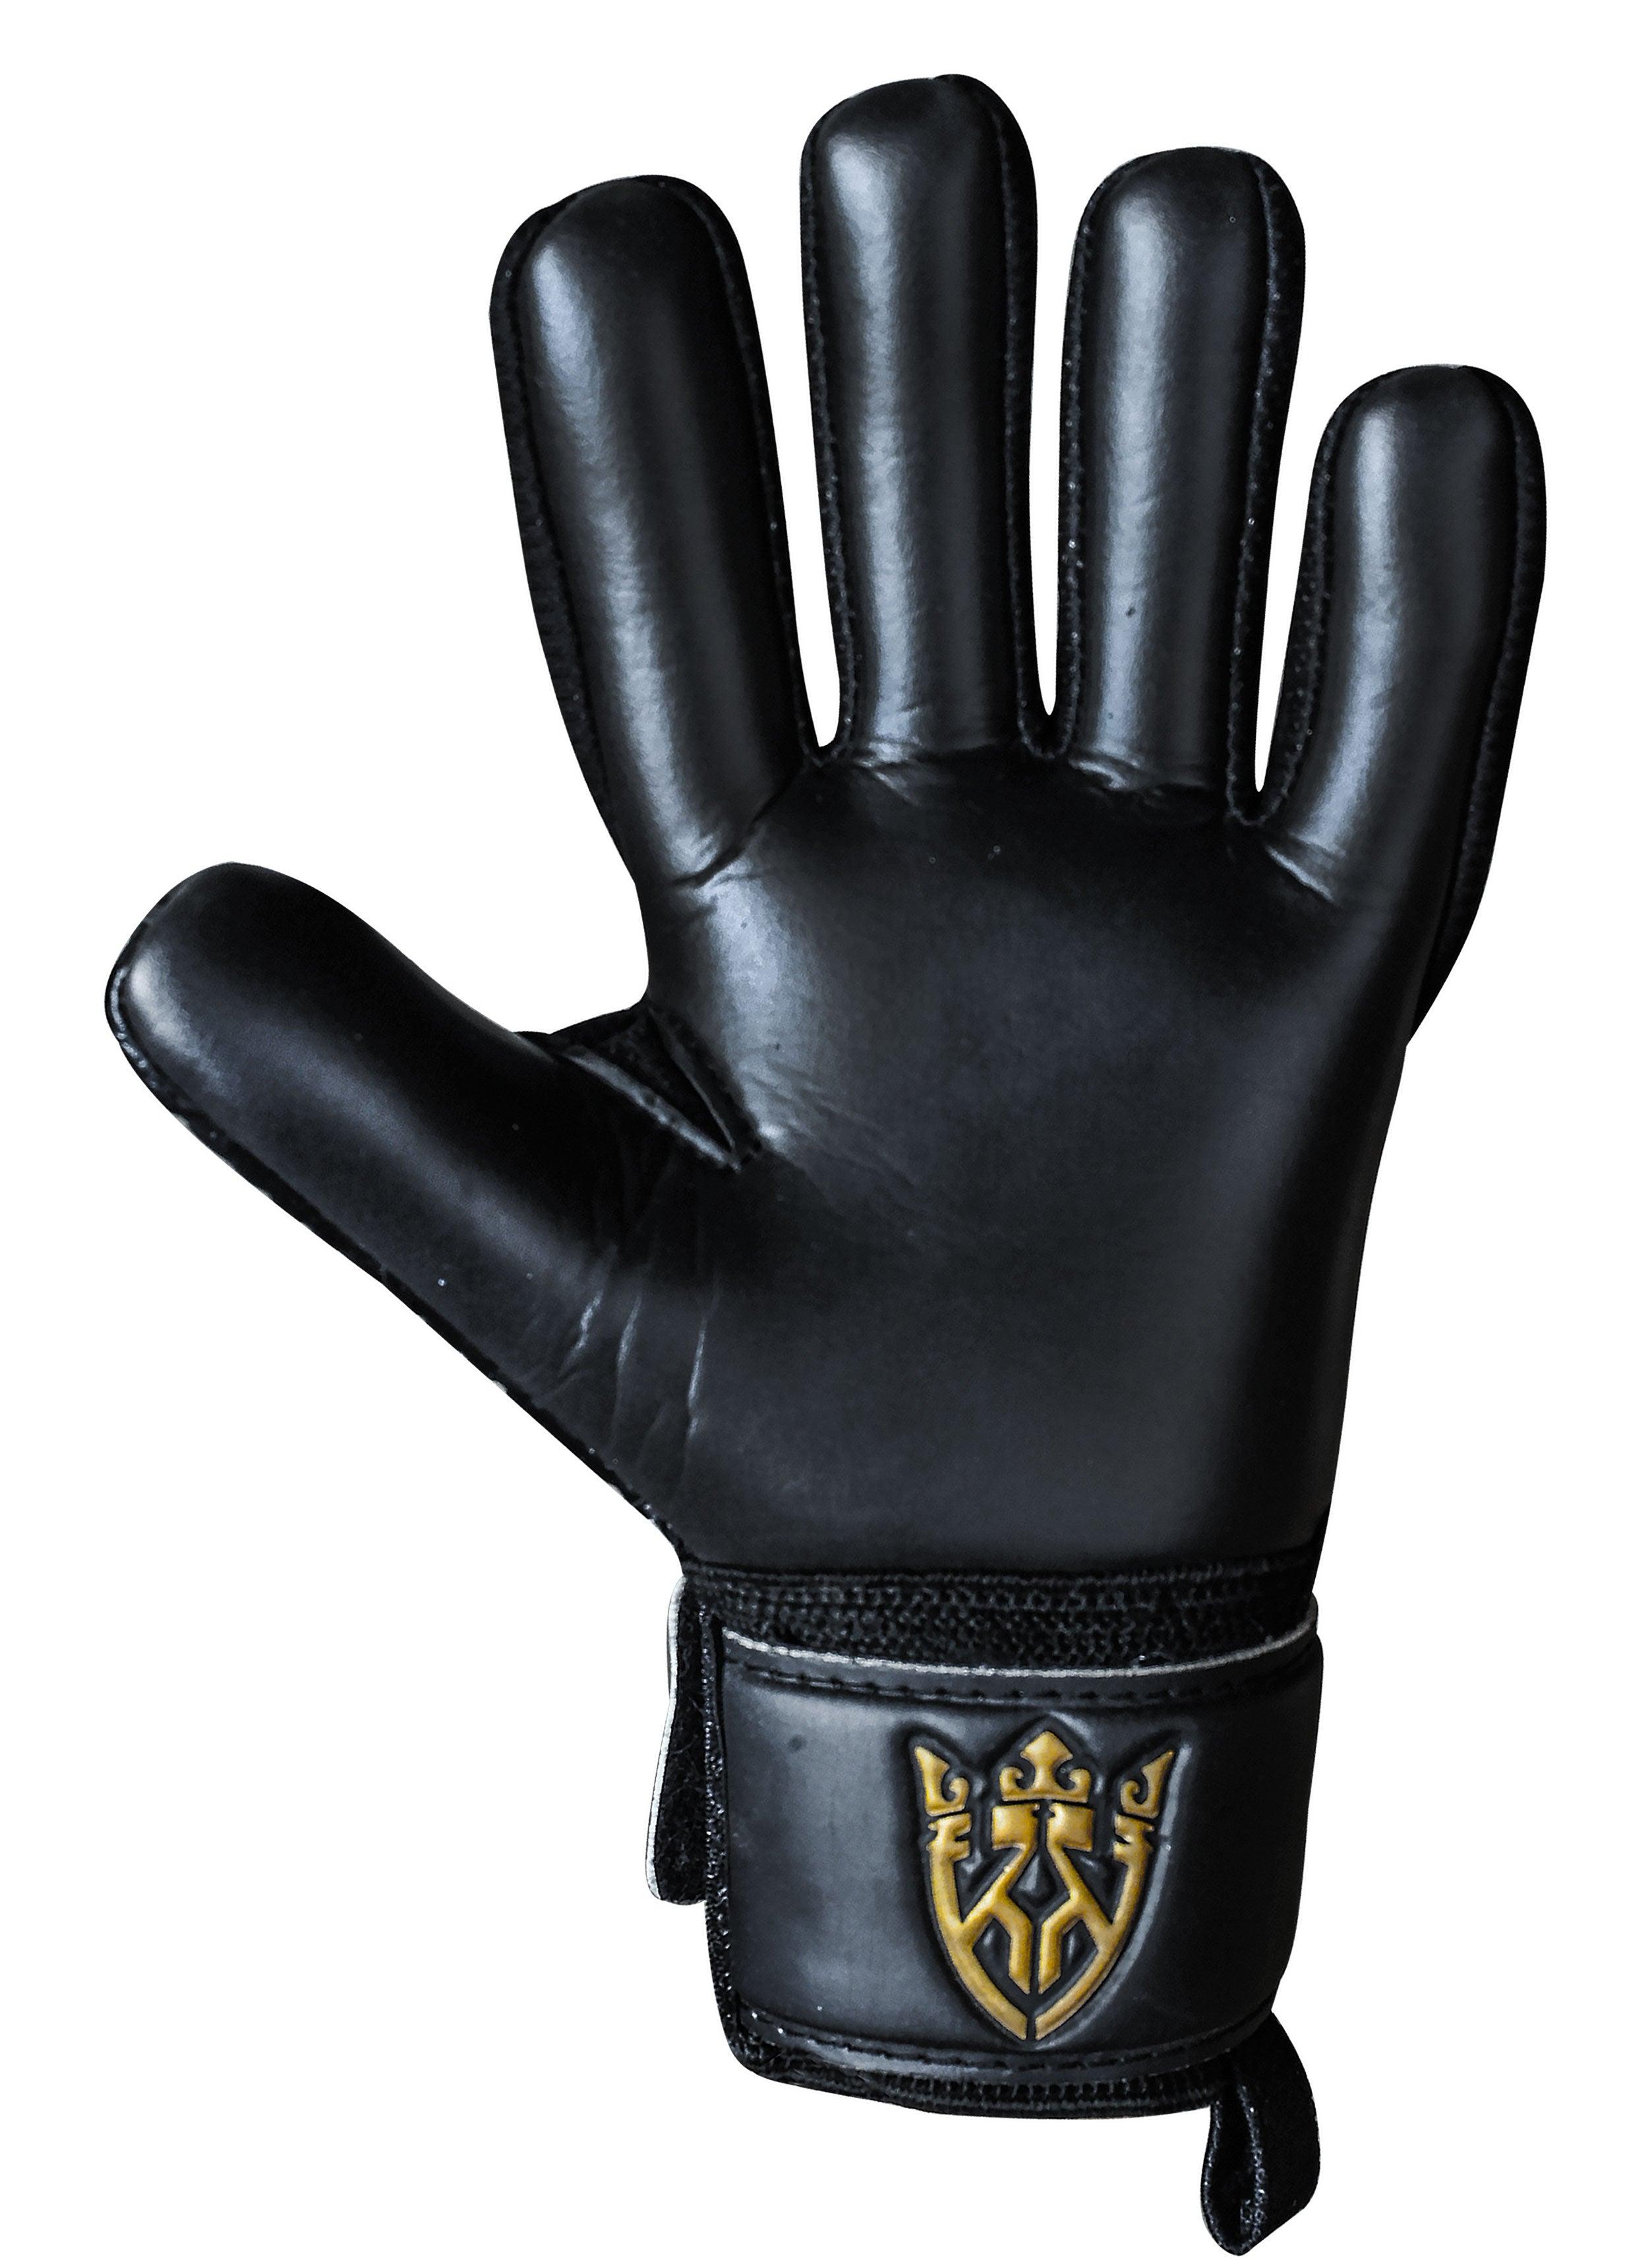 ALPHA GOLDEN WITHOUT FINGERSAVE goalkeeper gloves